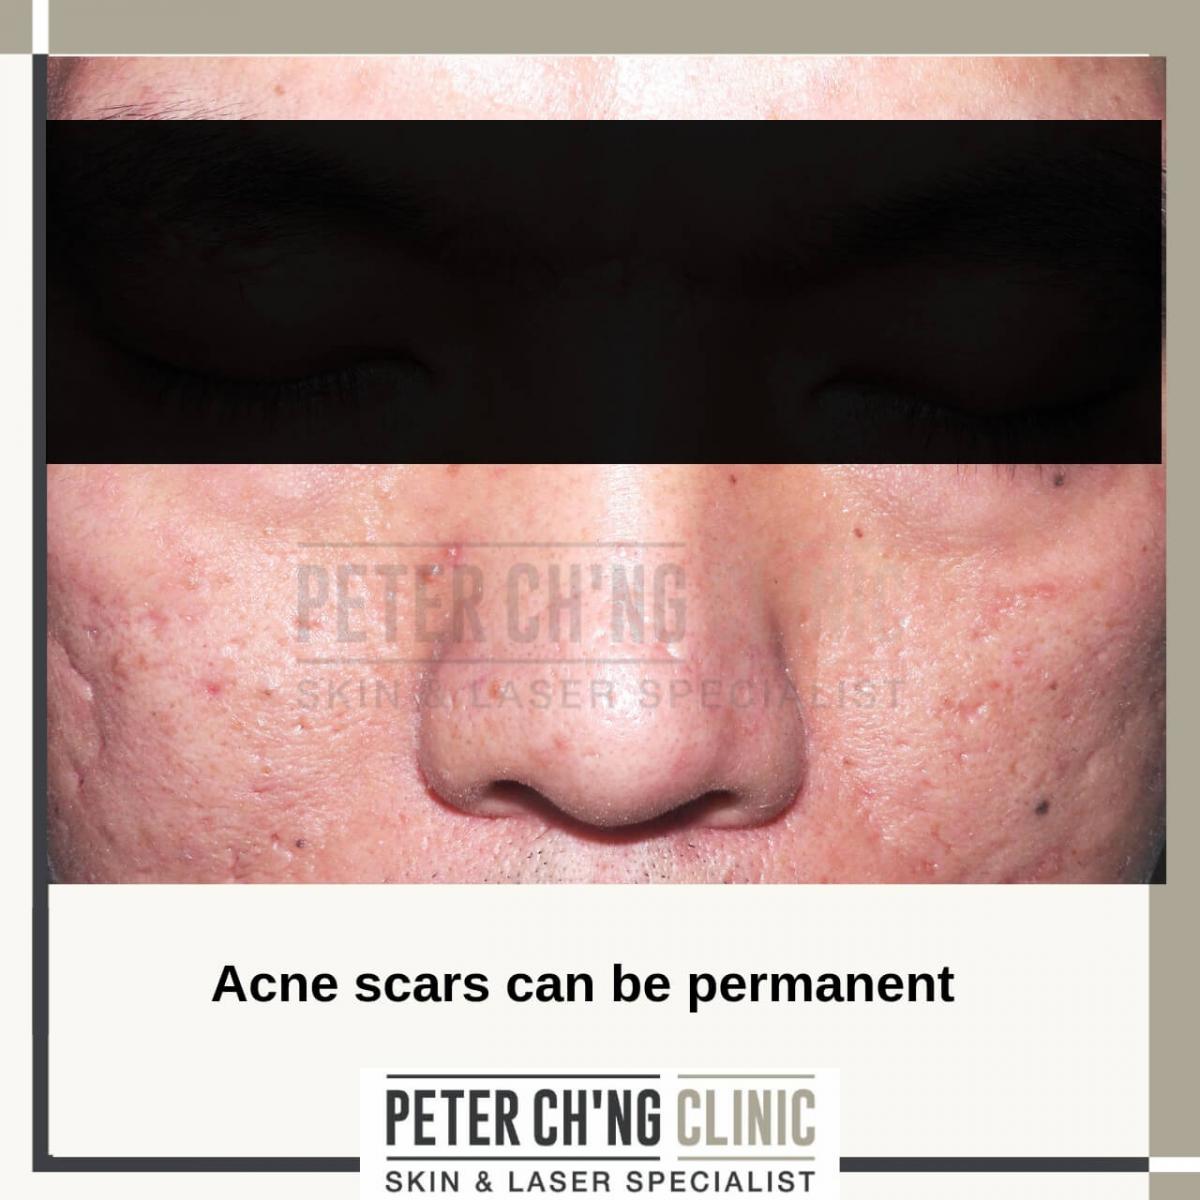 Acne scars